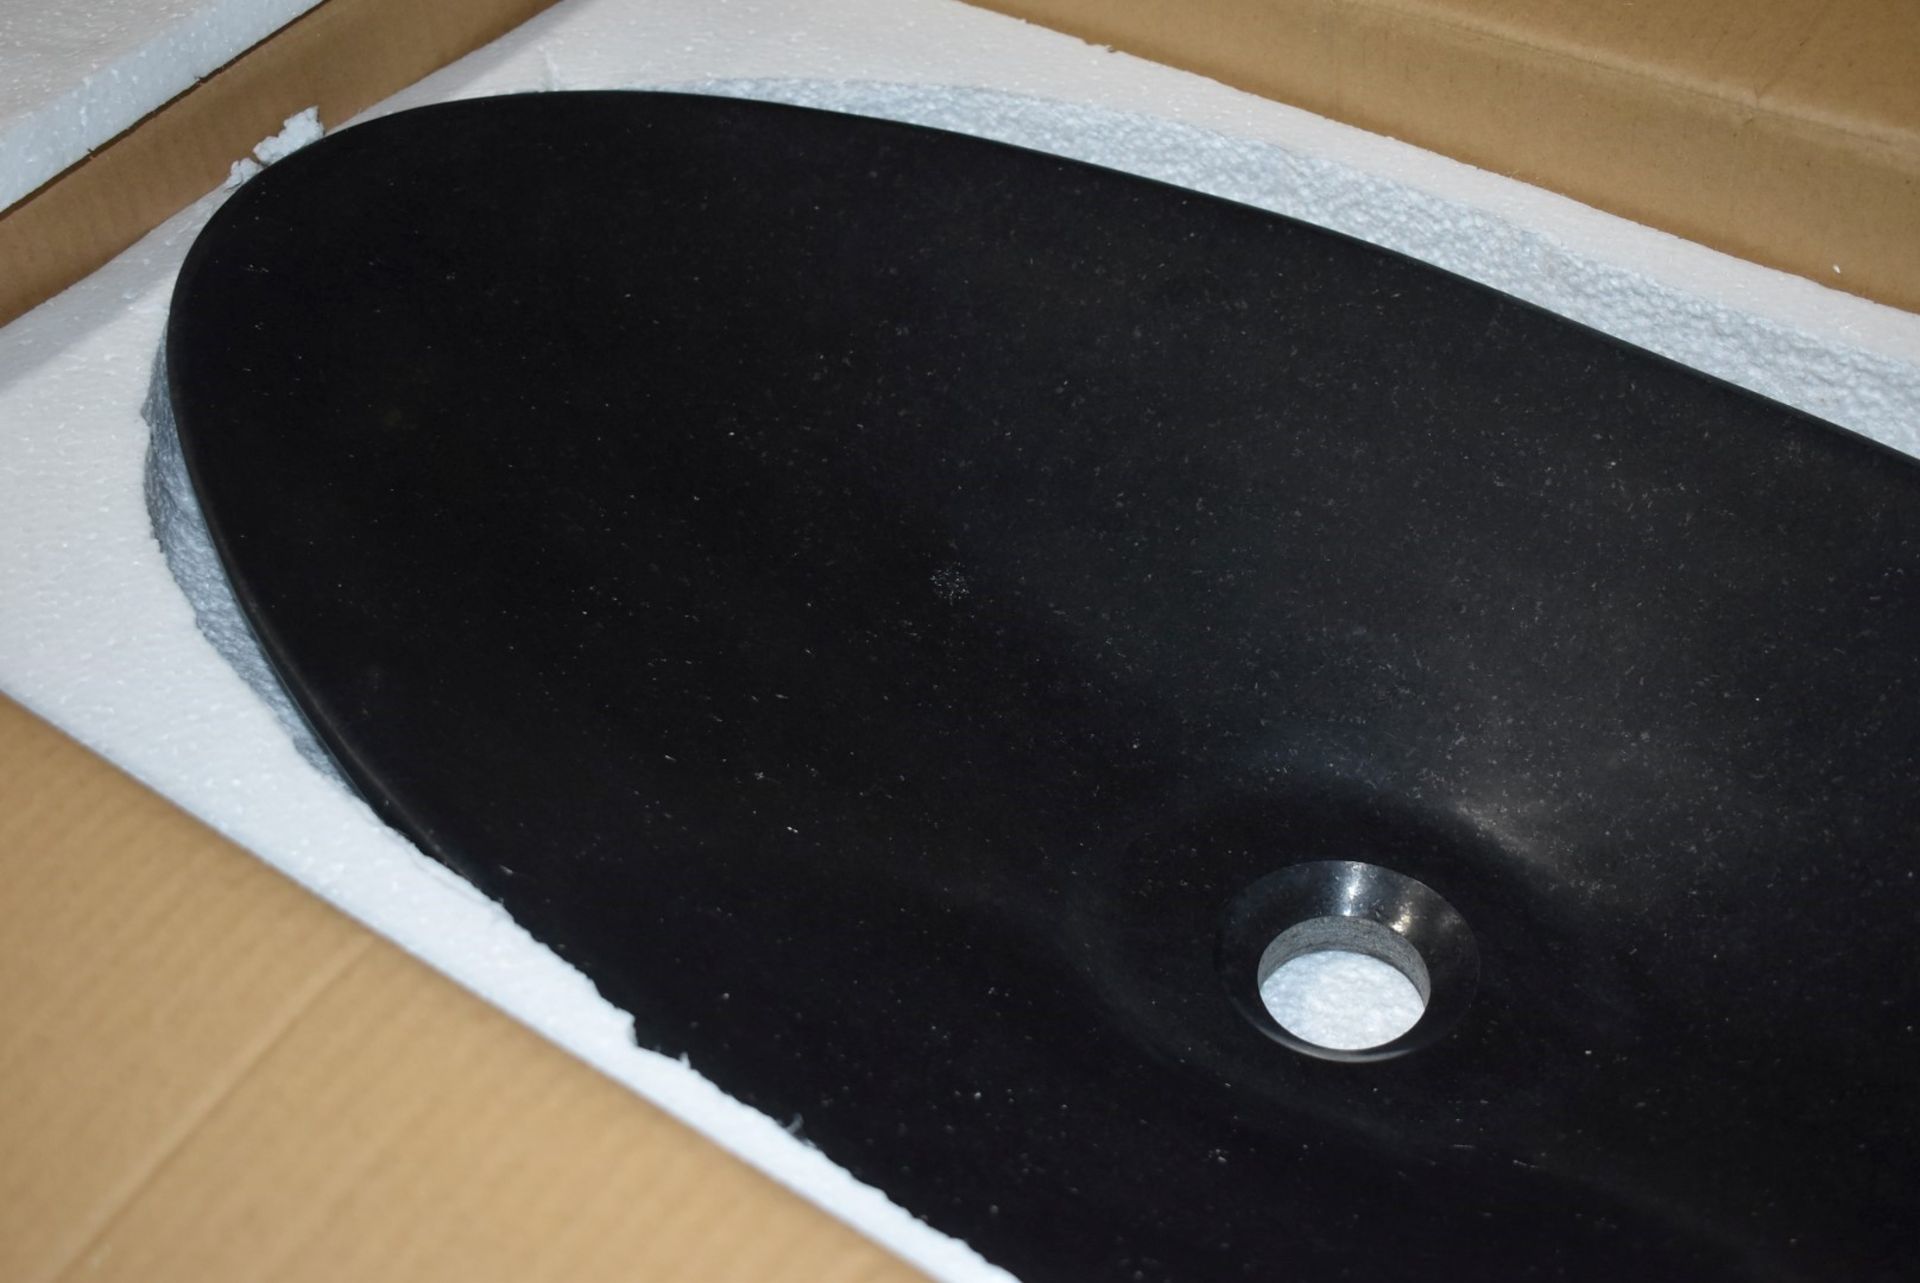 1 x Stonearth 'Cyra' Black Granite Stone Countertop Sink Basin - New Boxed Stock - RRP £620 - - Image 3 of 10